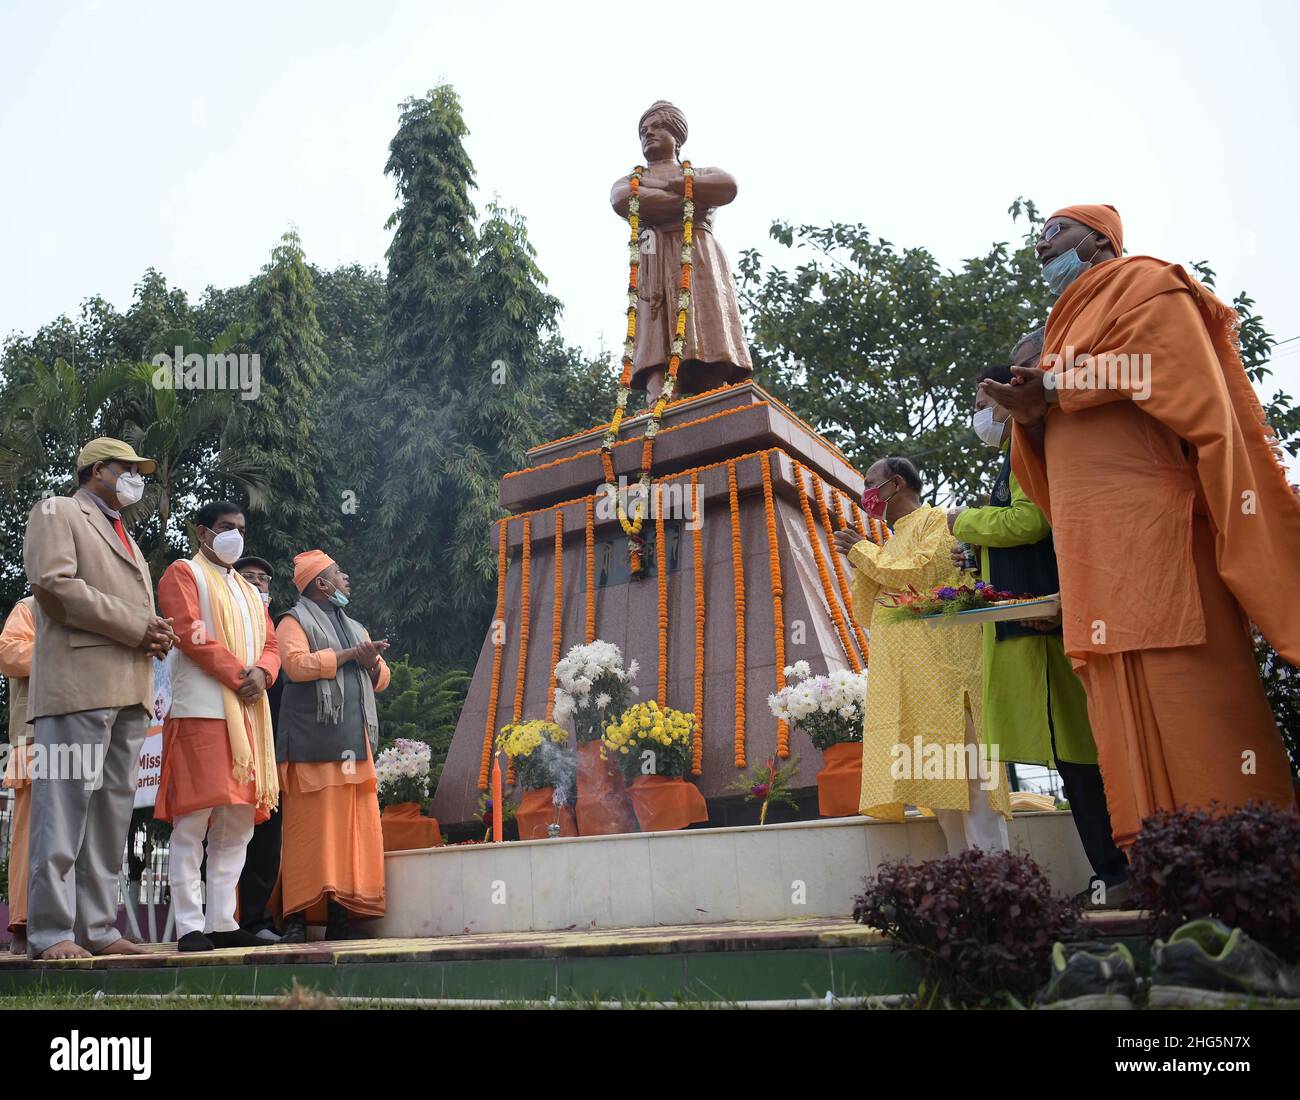 People gathered in front of the statue of Swami Vivekananda during celebration of Vivekananda’s 159th birth anniversary at Agartala. Tripura, India. Stock Photo